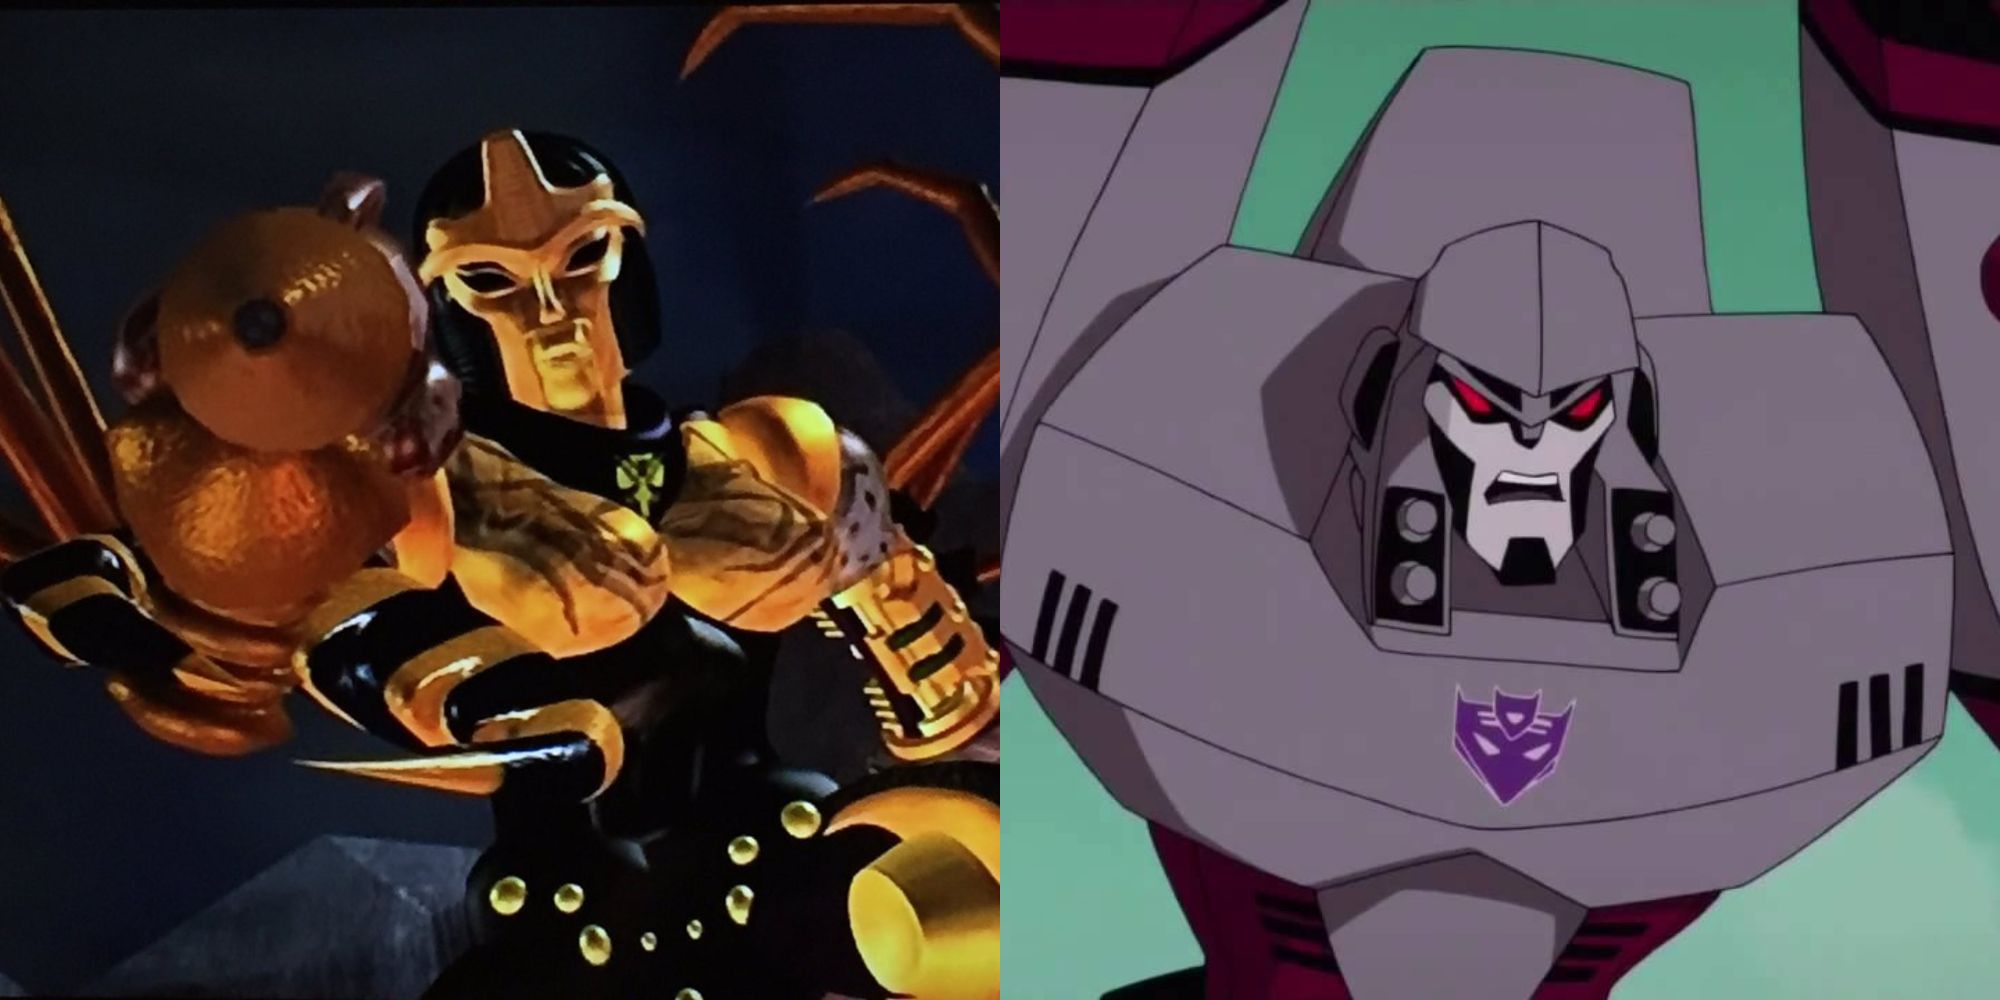 Split image showing Blackarachnia and Megatron in Transformers.